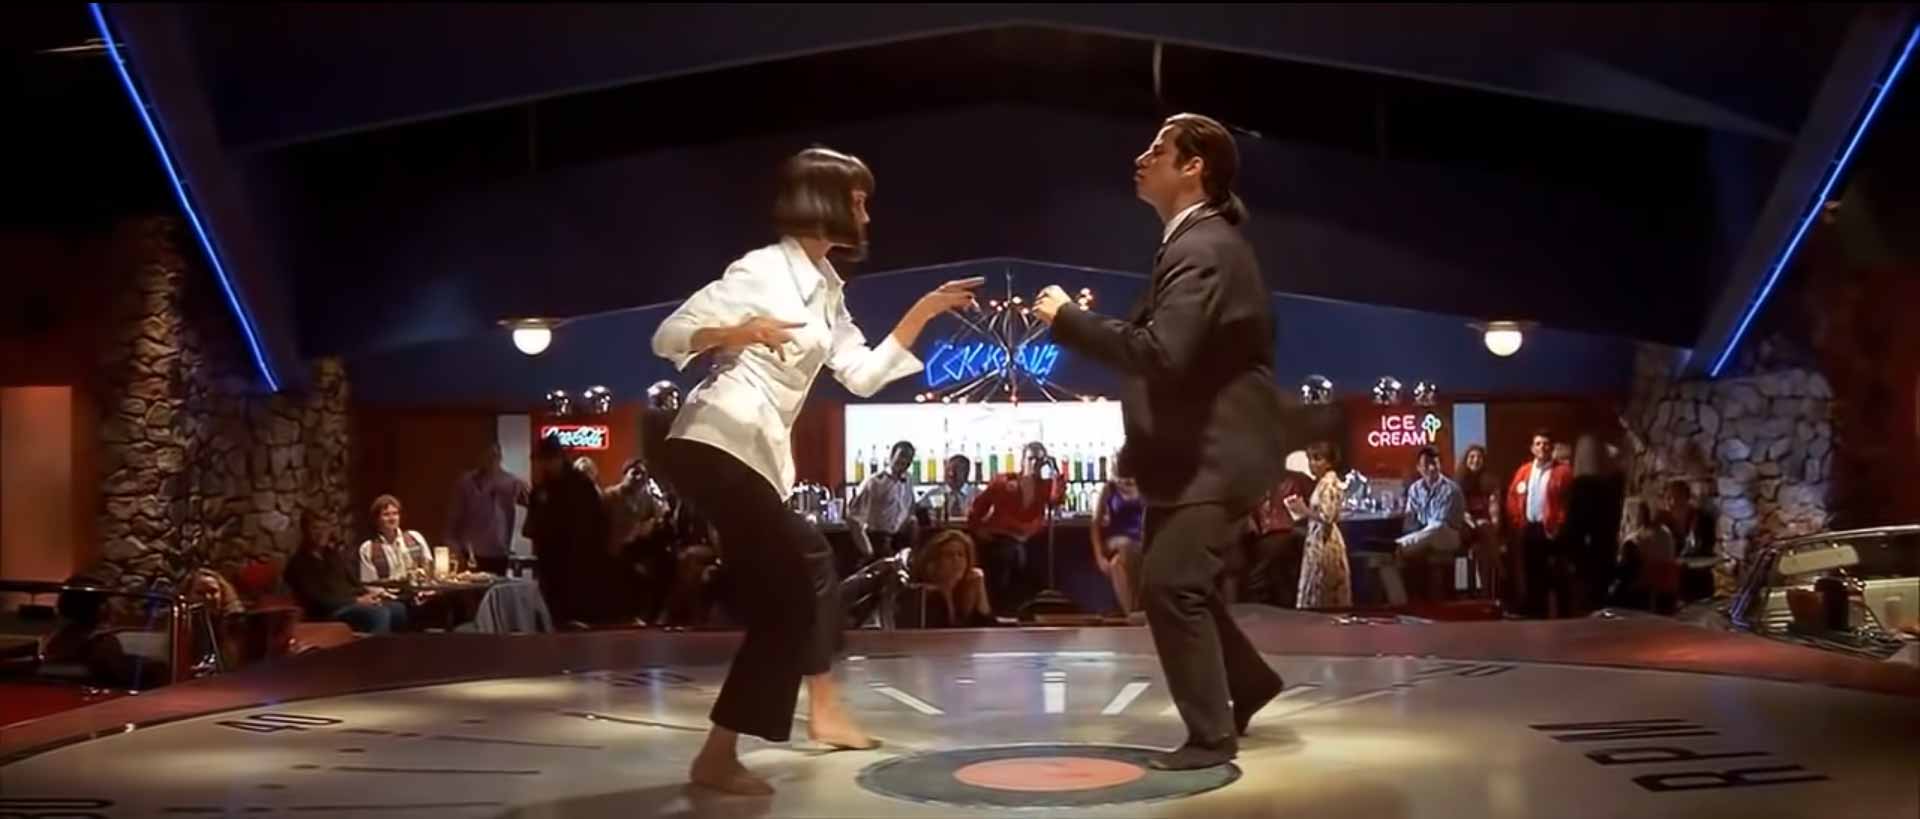 Pulp Fiction Dance Scene John Travolta And Uma Thurman